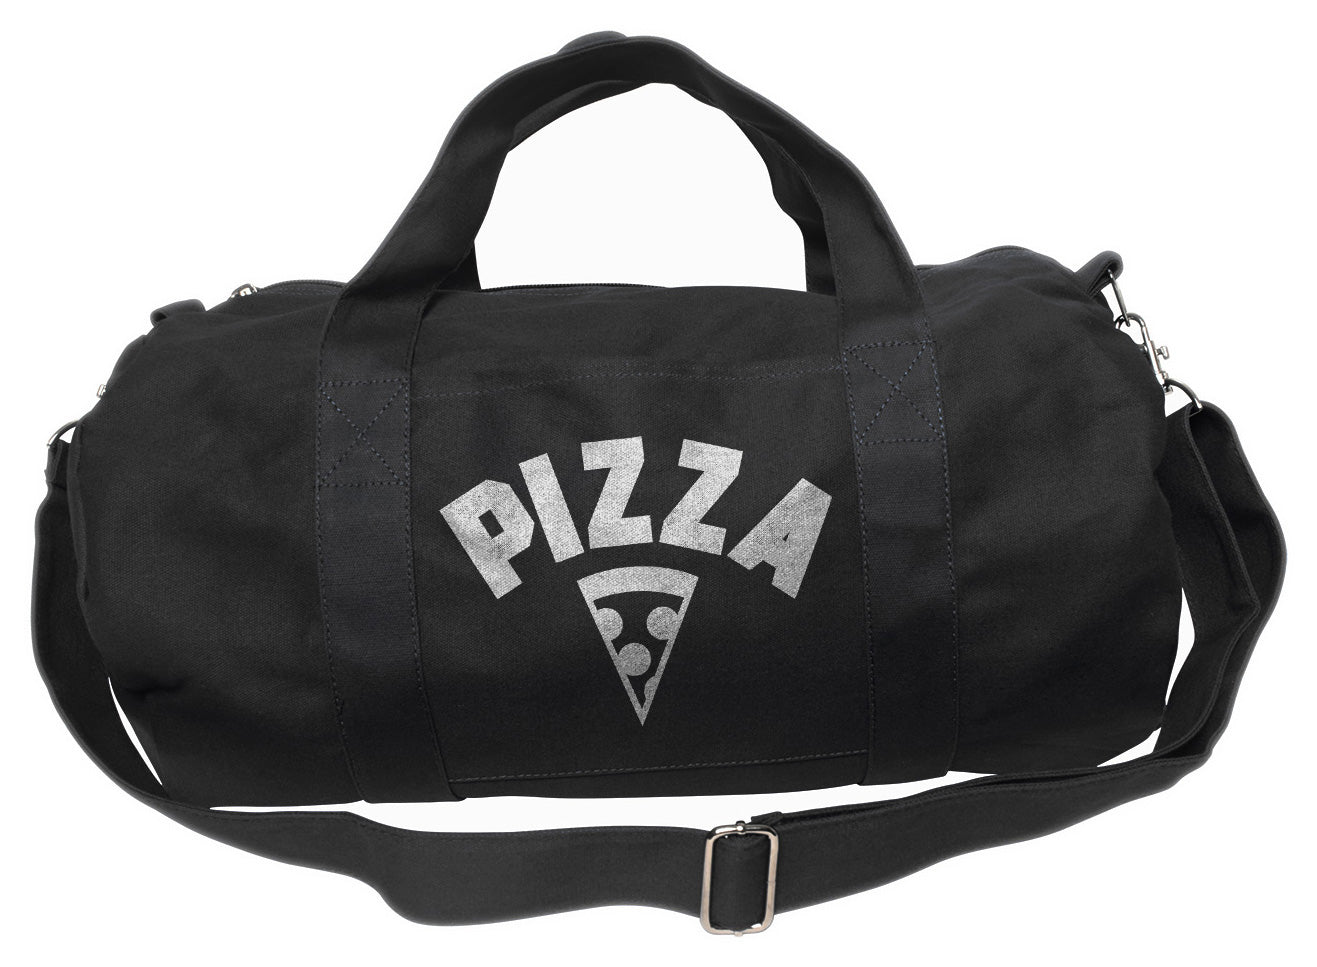 Team Pizza Duffel Bag